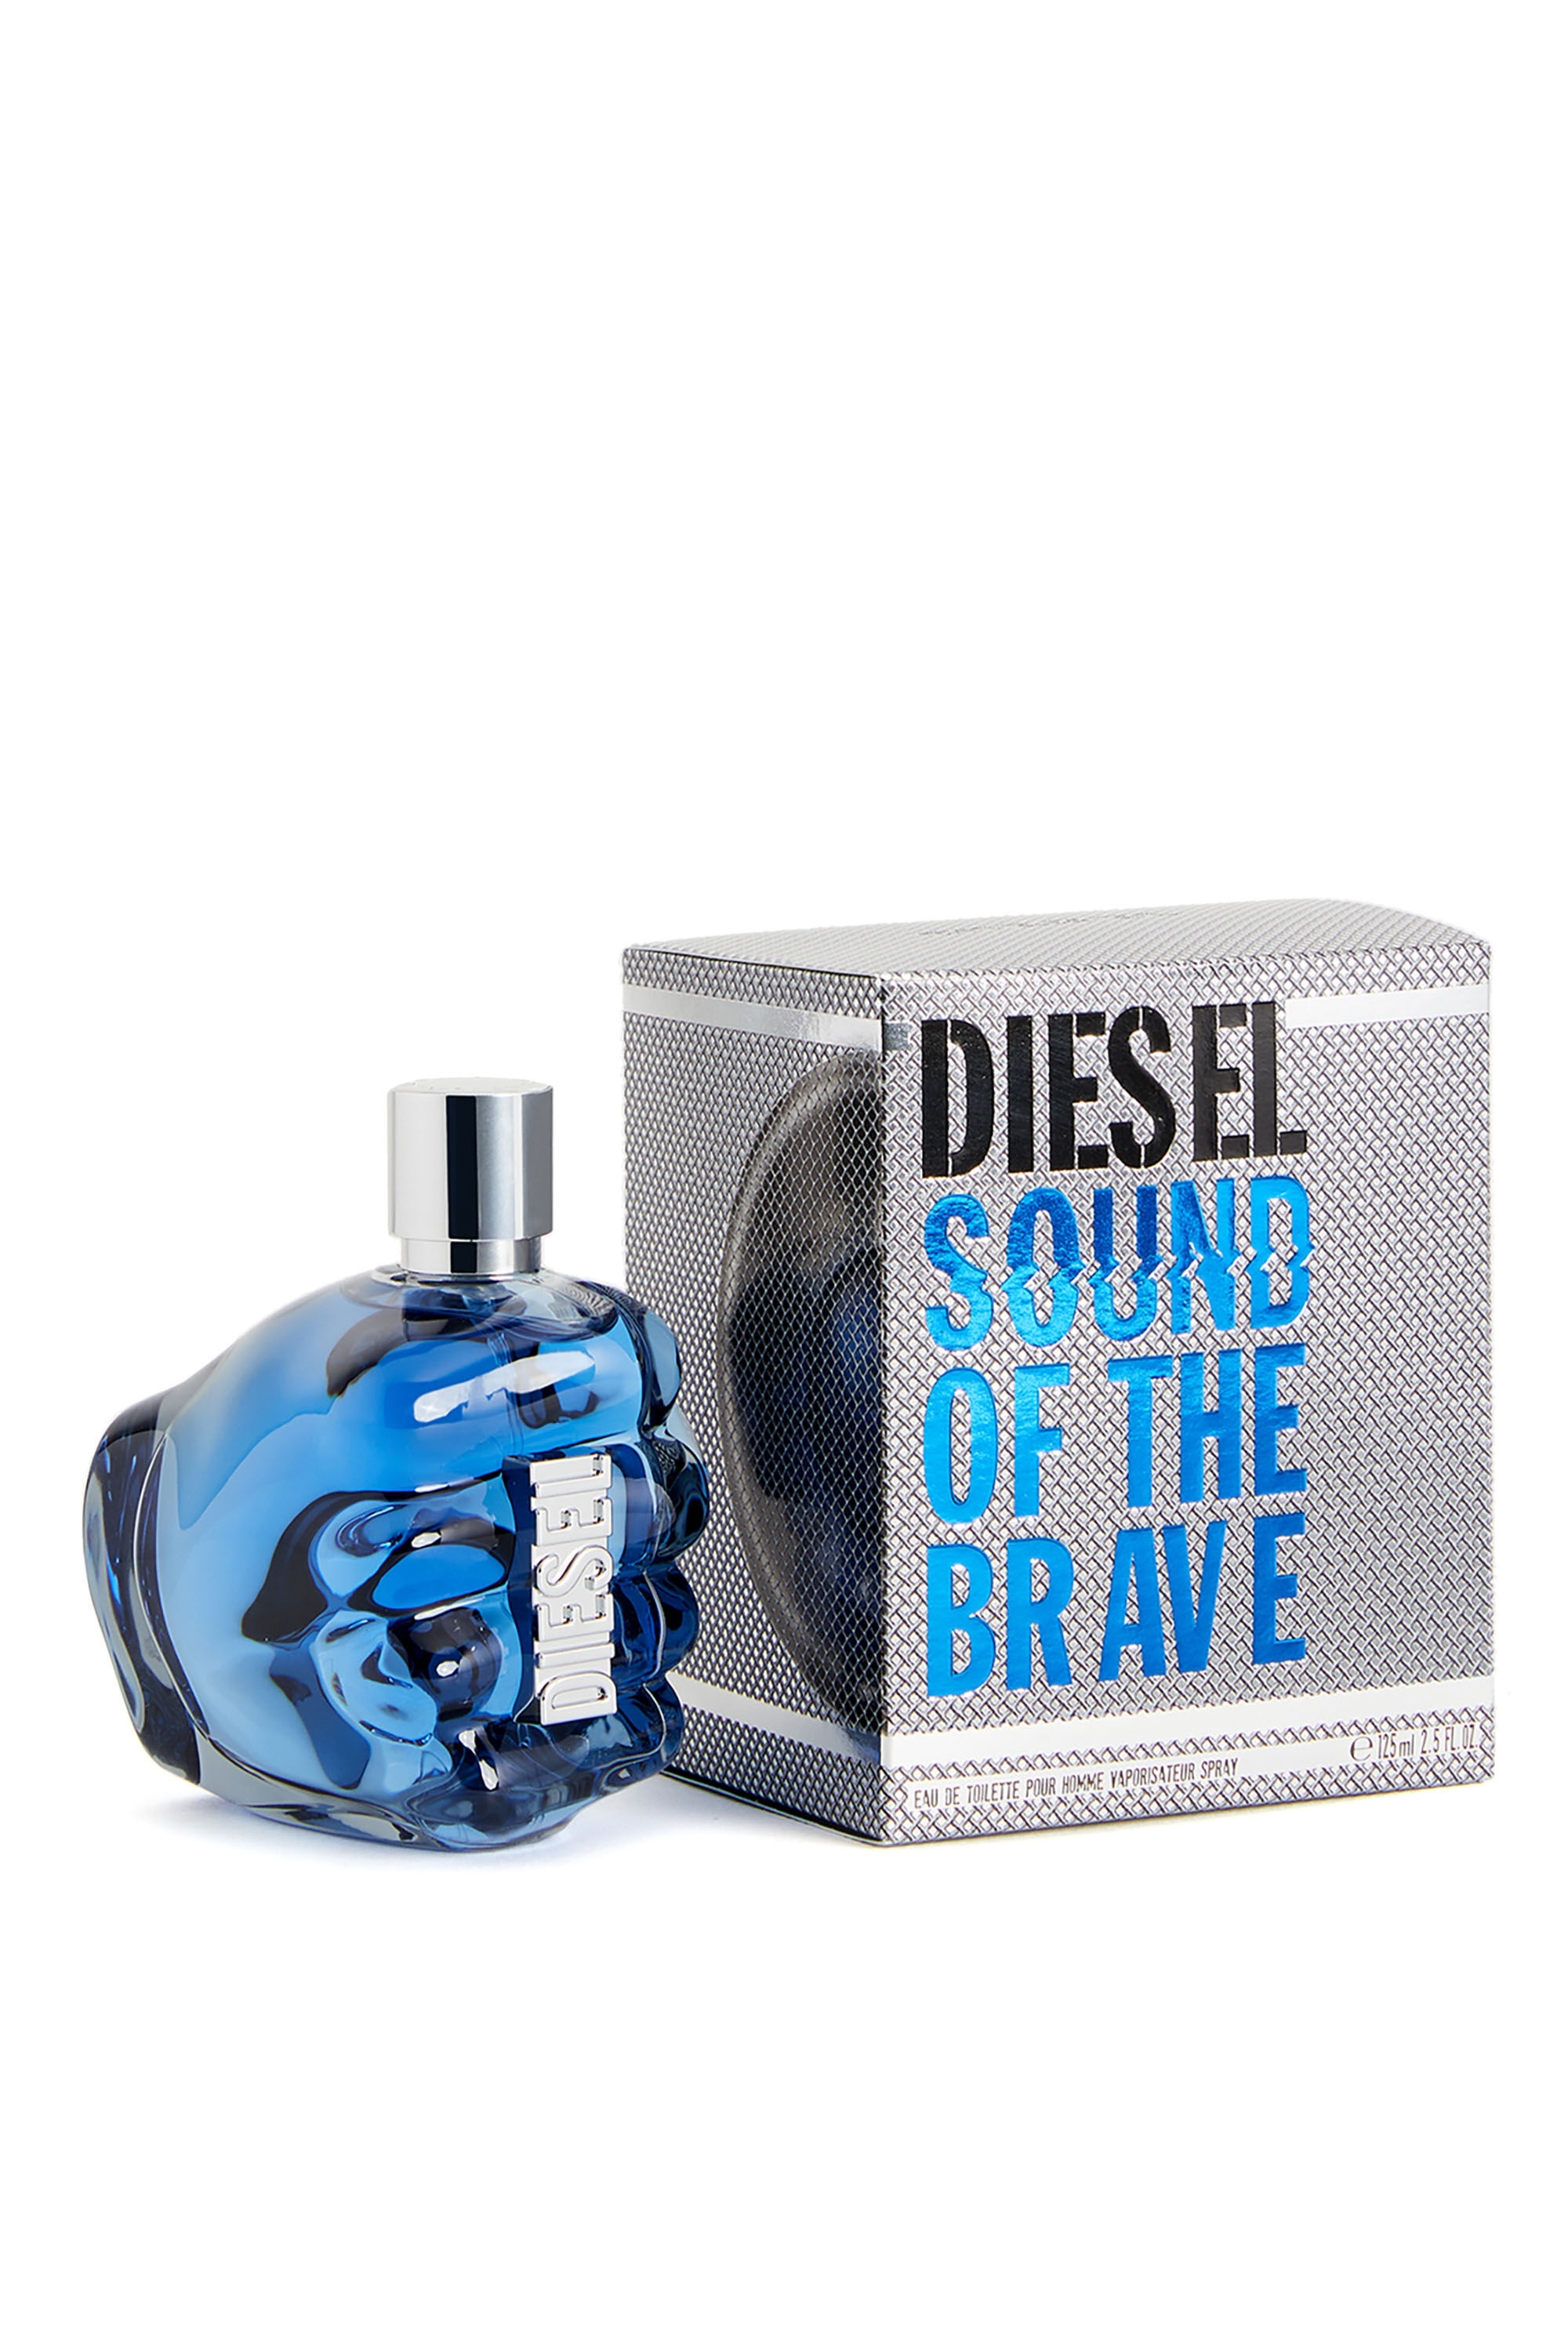 Diesel - SOUND OF THE BRAVE 125ML, Blue - Image 2